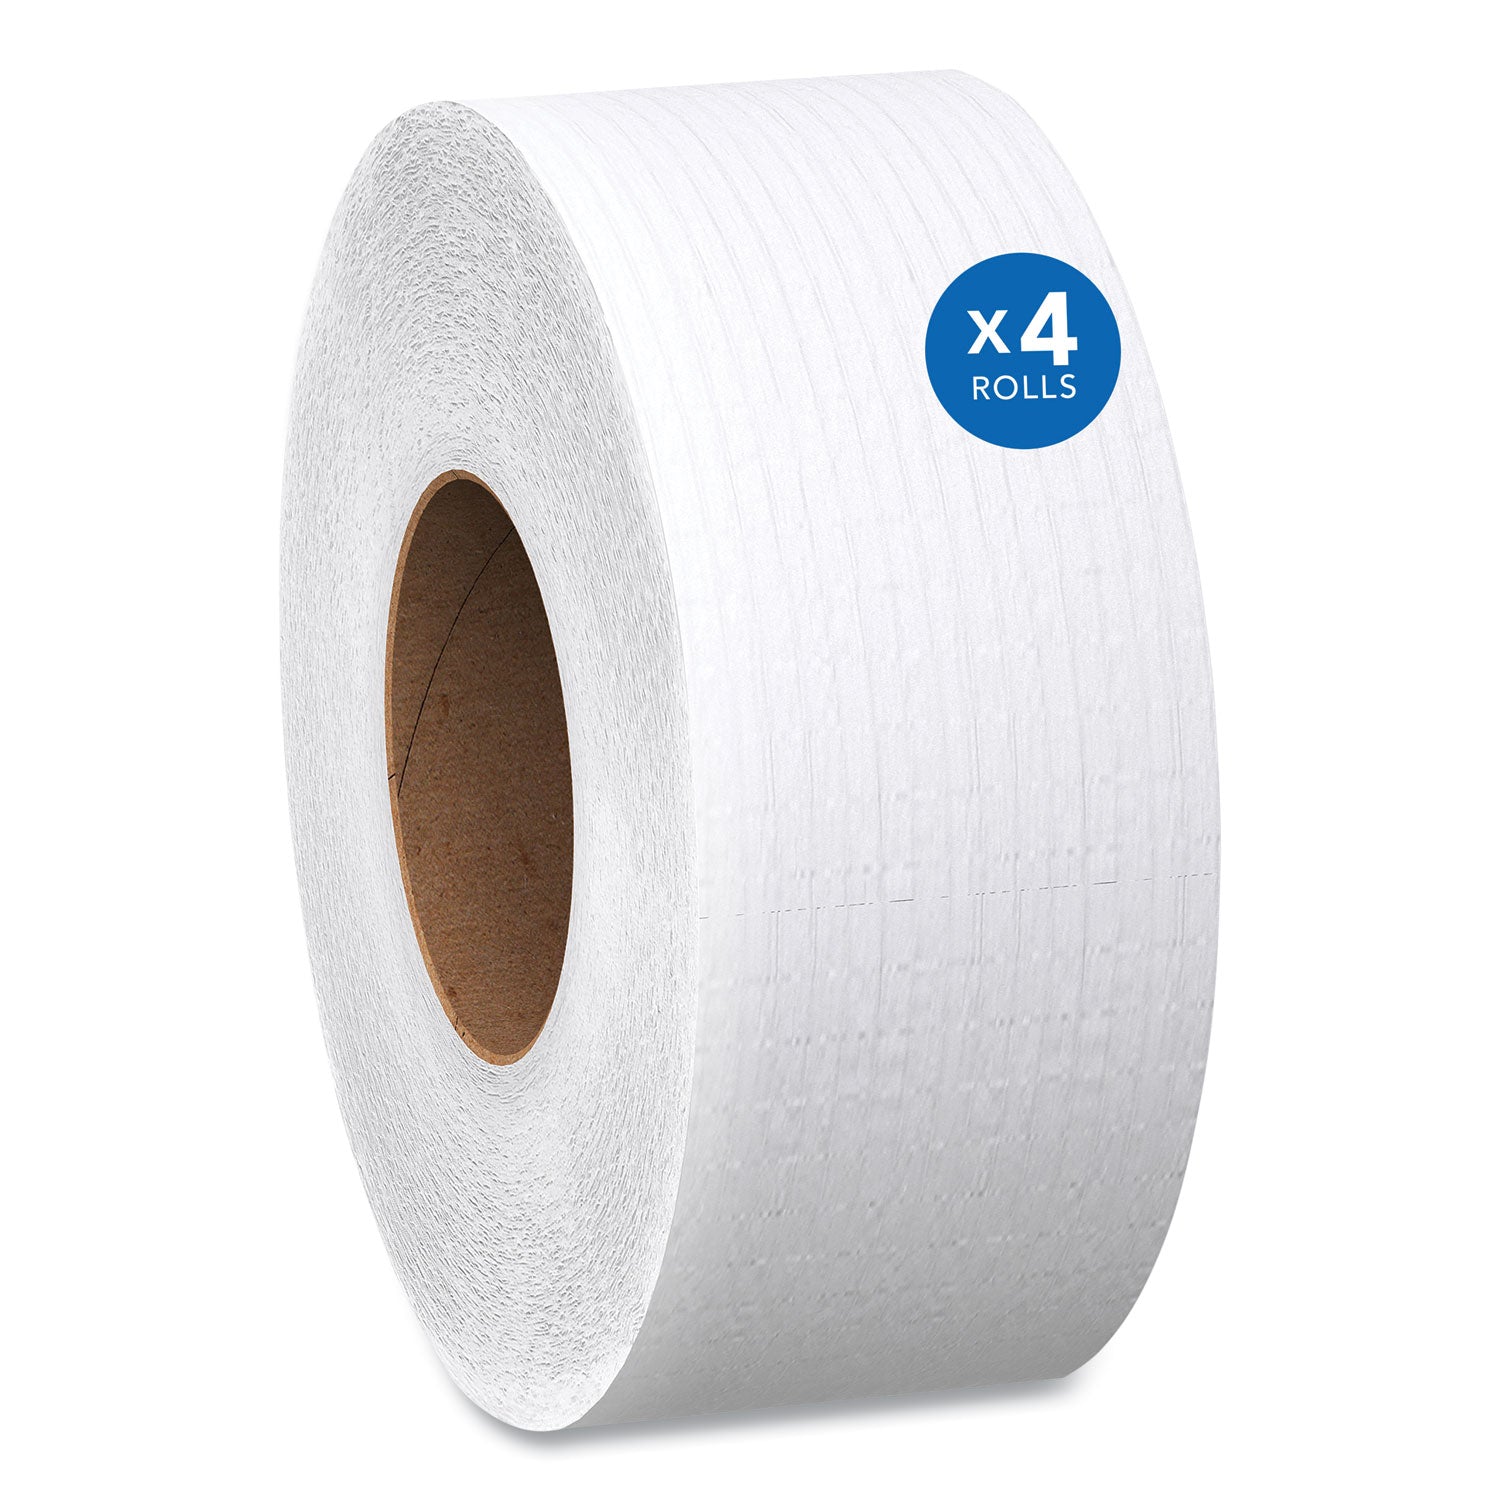 Essential JRT Jumbo Roll Bathroom Tissue, Septic Safe, 2-Ply, White, 3.55" x 1,000 ft, 4 Rolls/Carton - 